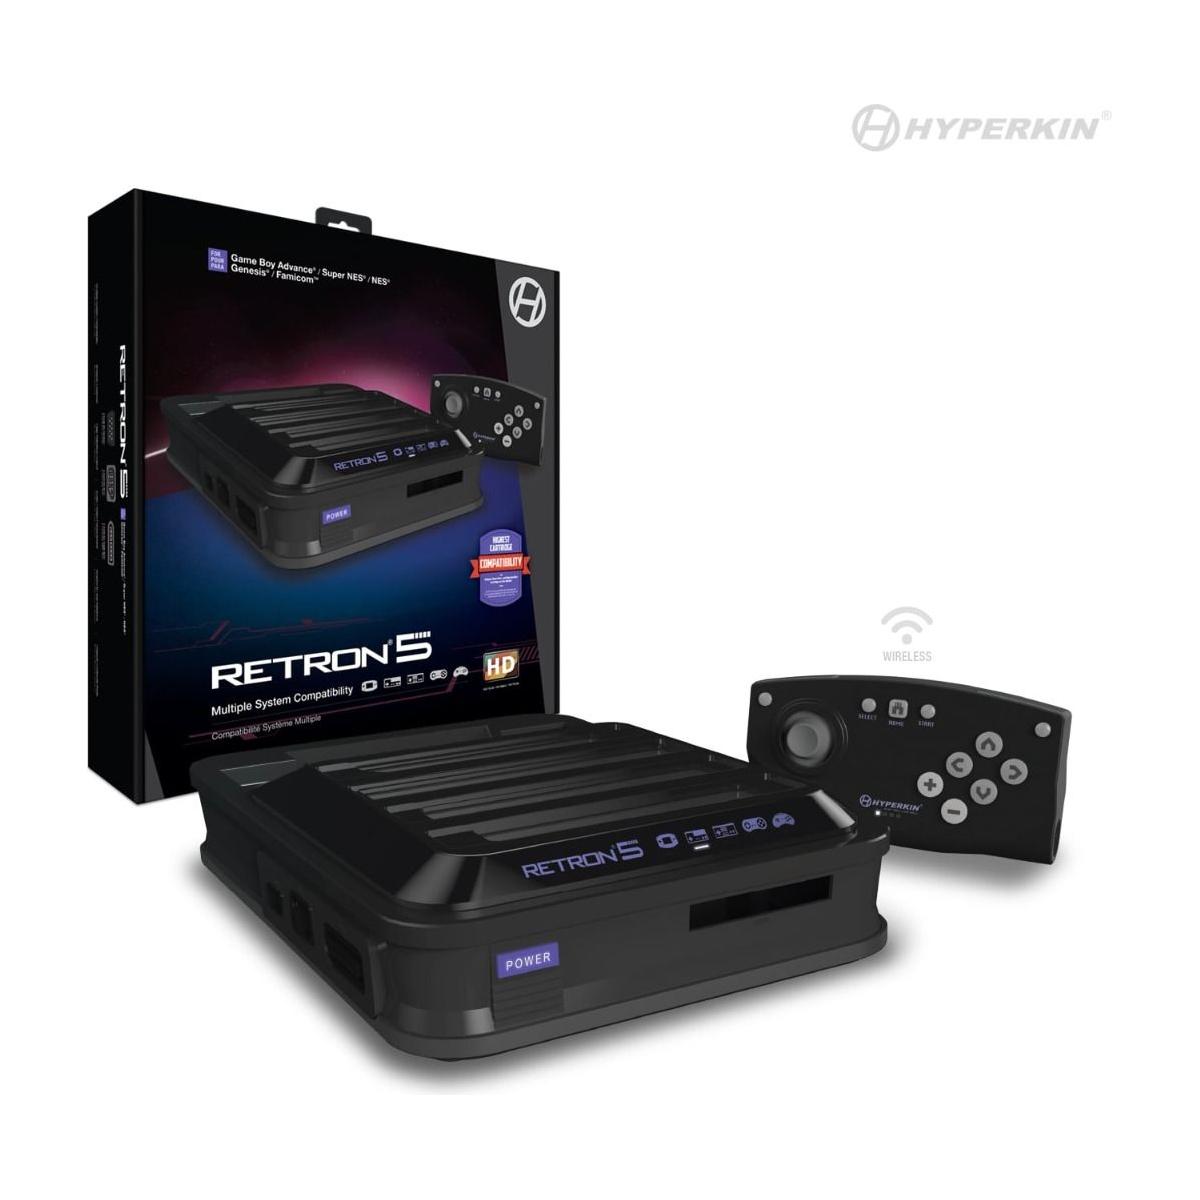 Retron 5 HD Console (NES/SNES/GENESIS/GB/GBA) (Black)